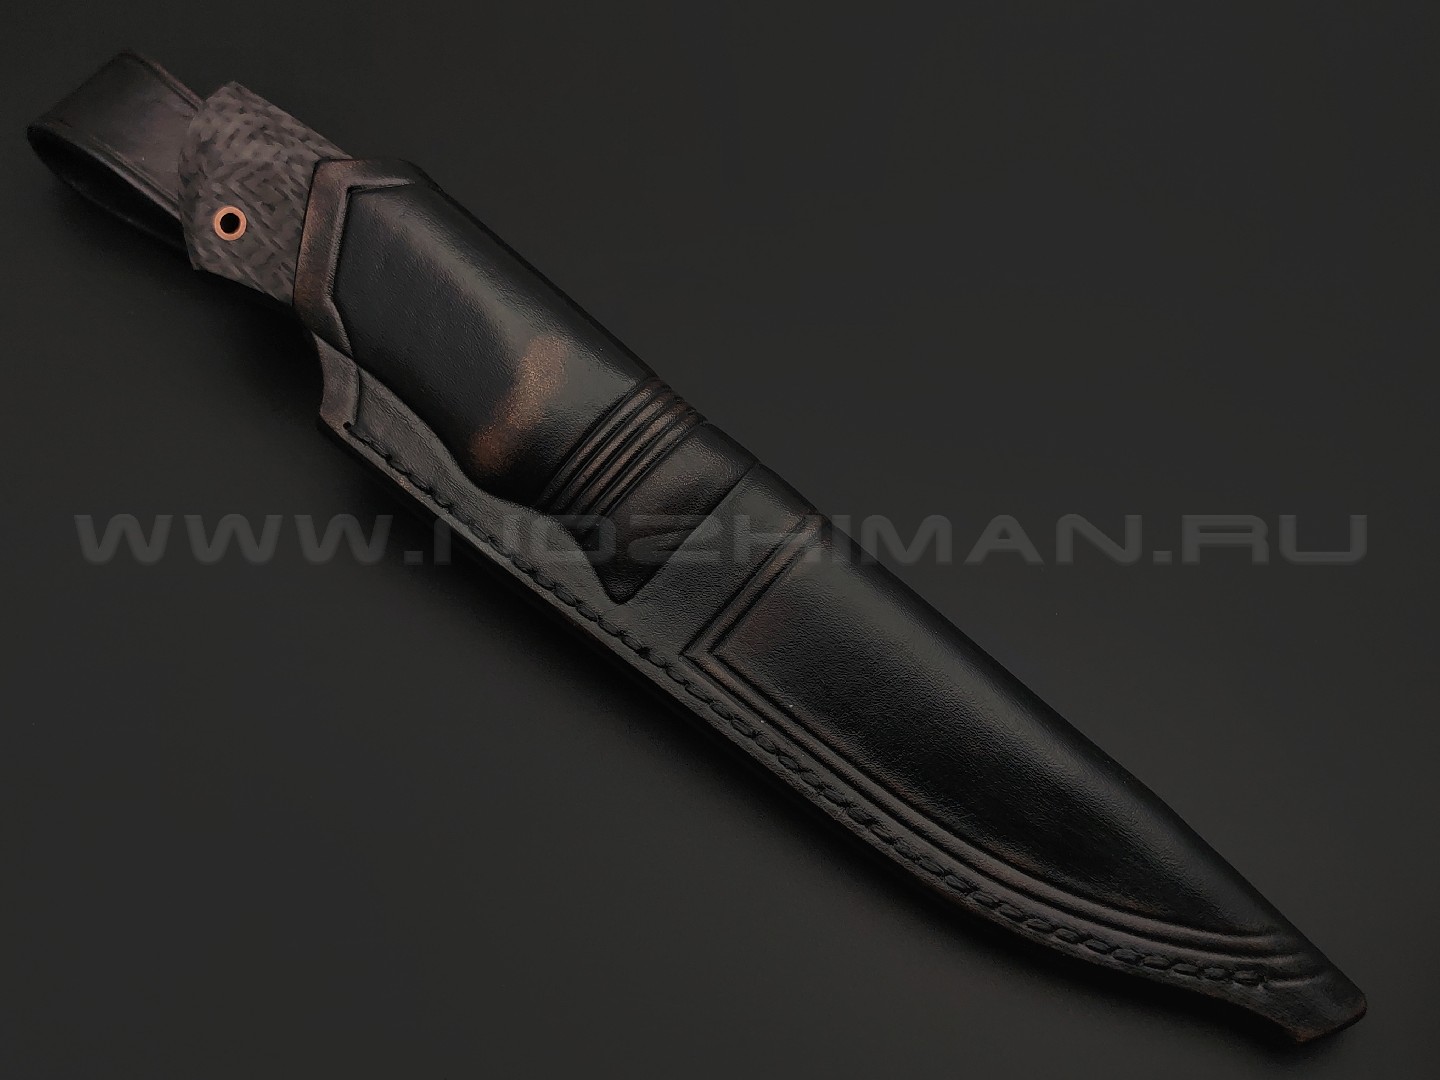 Кузница Васильева нож НЛВ148 ламинат CPM S125V, рукоять Carbon fiber, мокумэ-ганэ, бронза